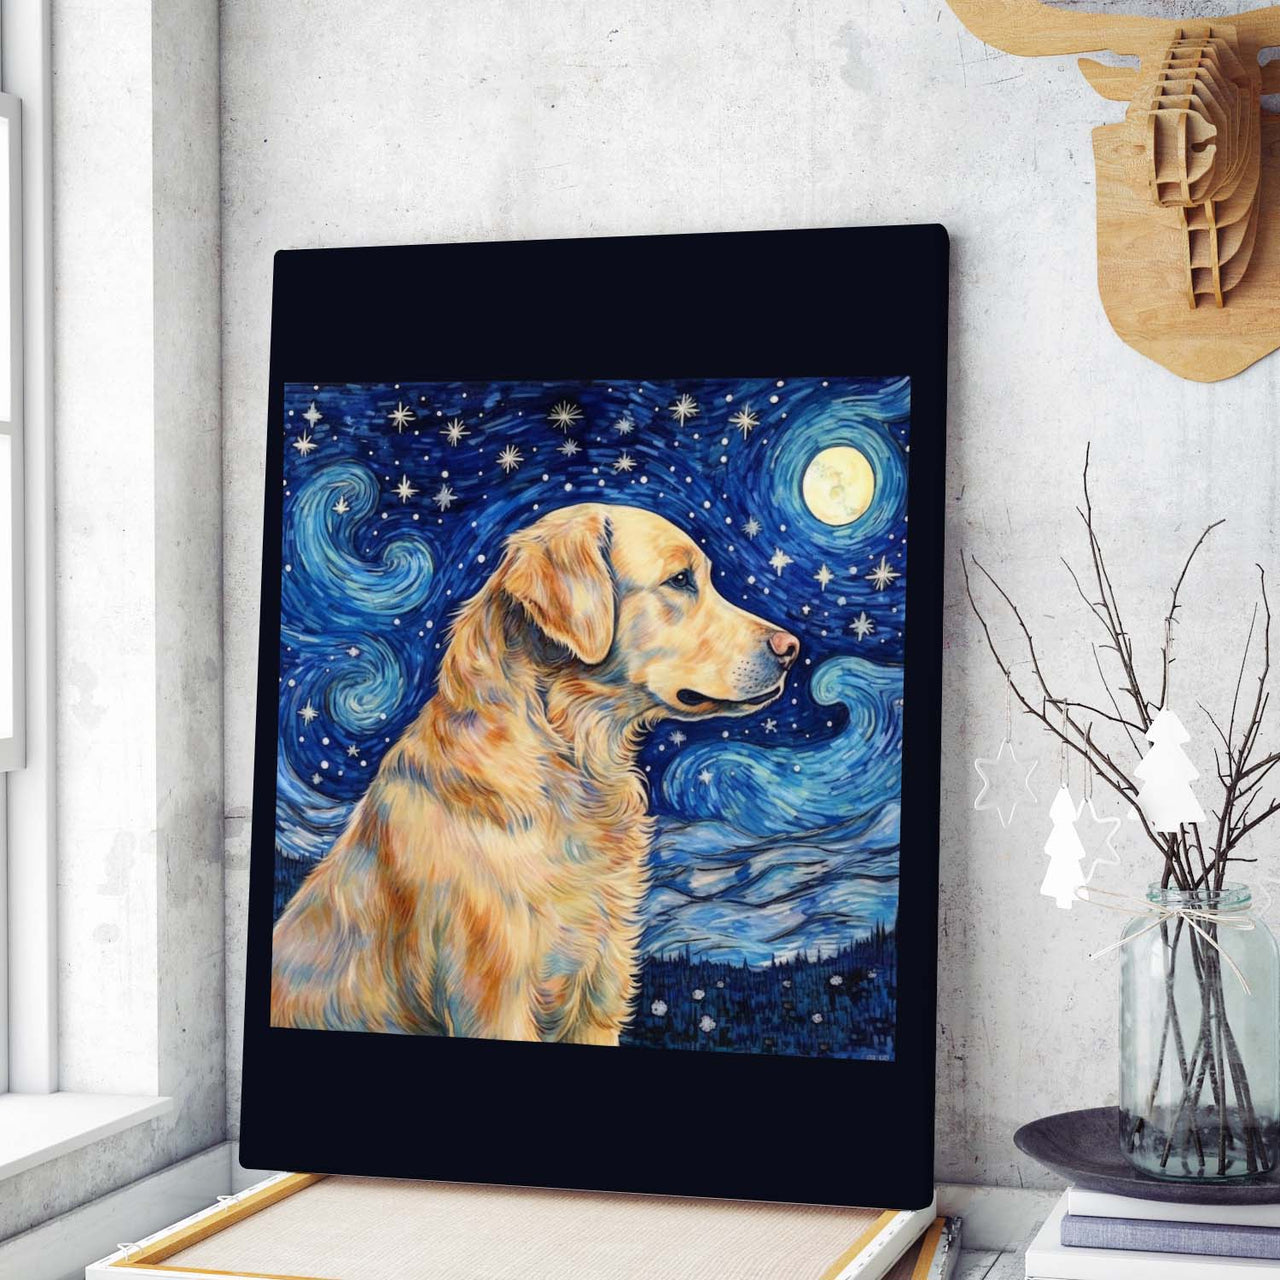 Drawings Golden Retriever Dog 02 Van Goh Style Vintage Framed Canvas Prints Wall Art Hanging Home Decor